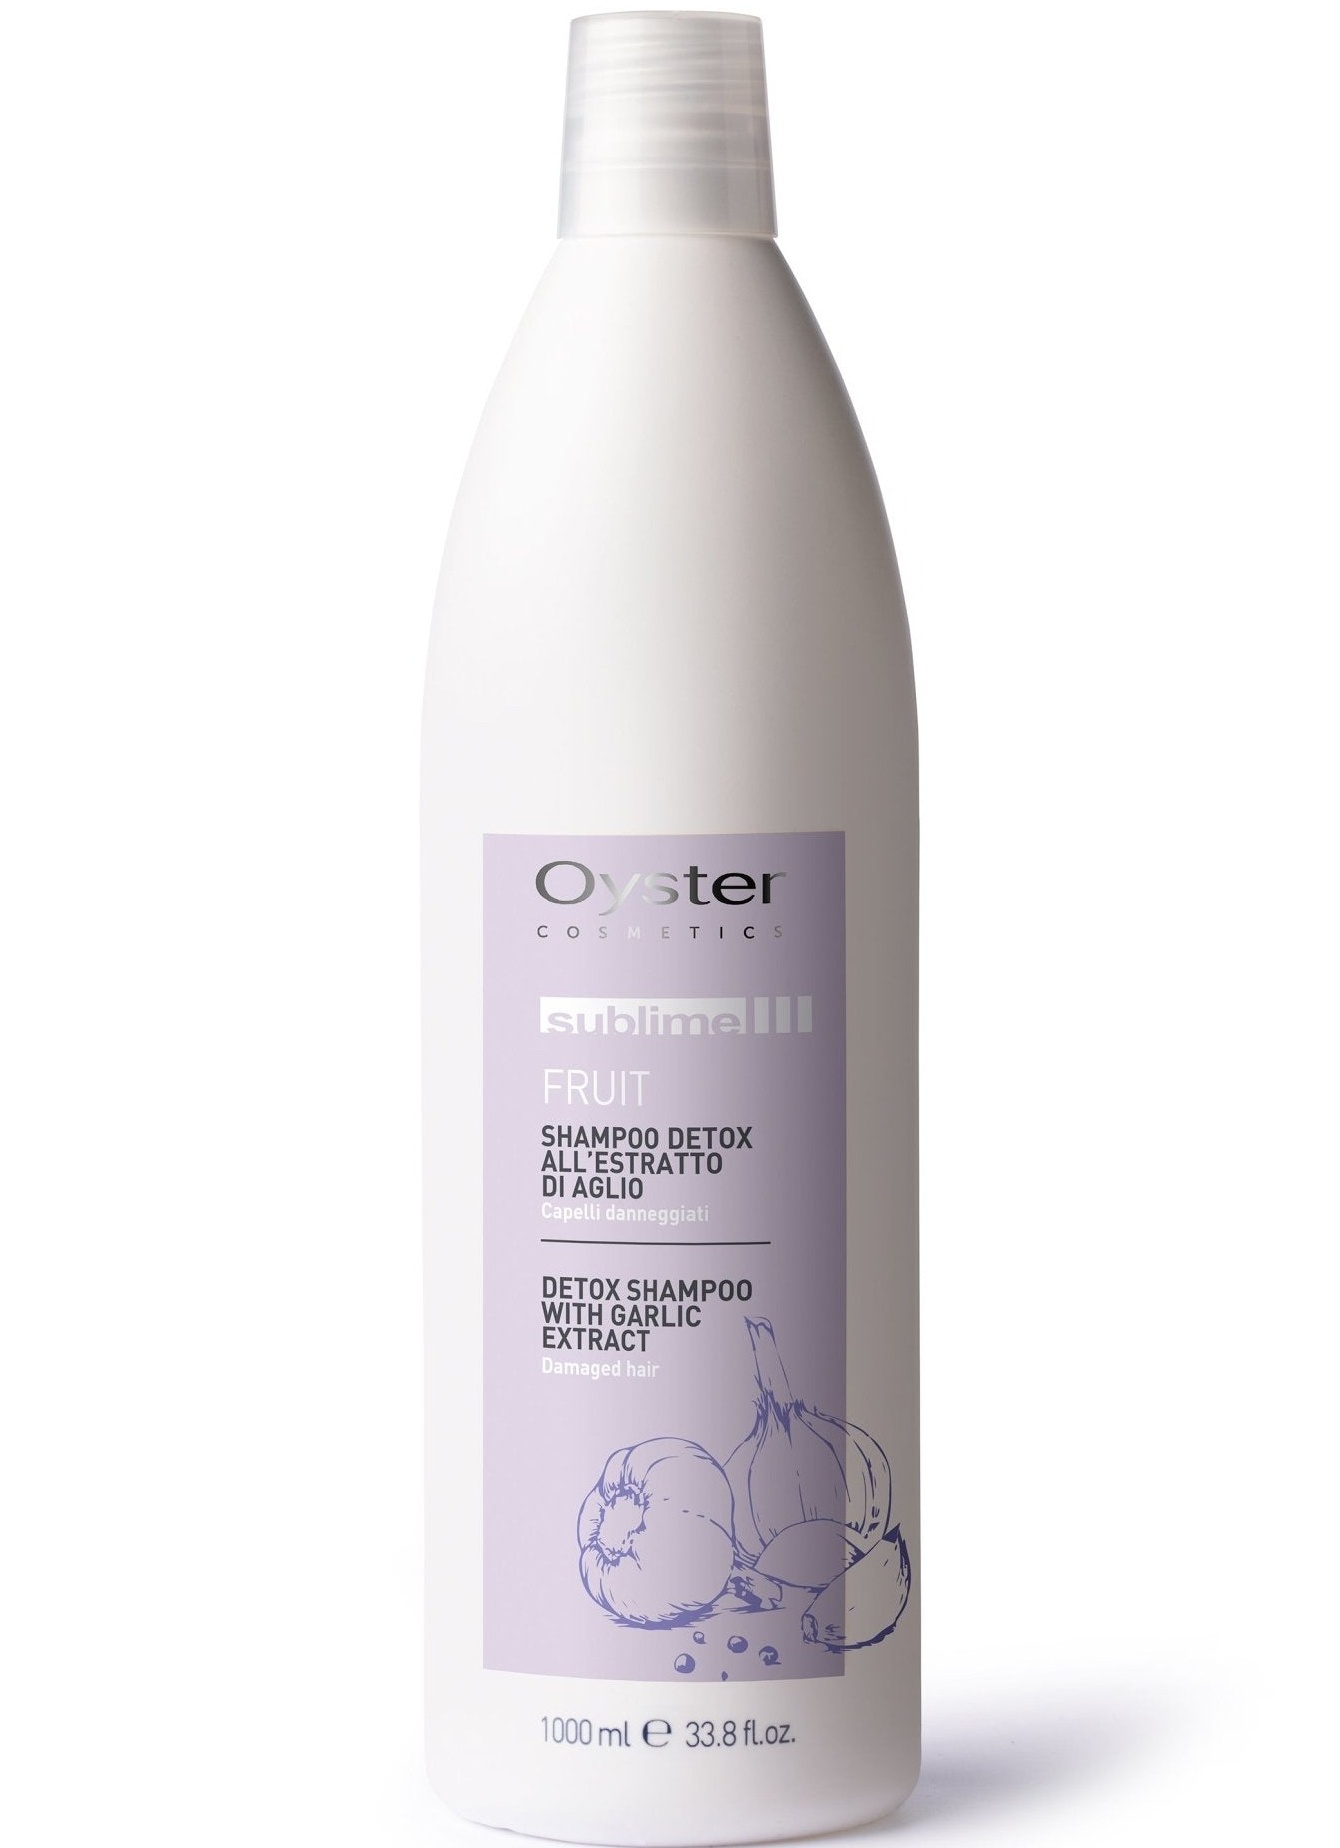 Oyster cosmetics Detox Shampoo With Garlic Extract